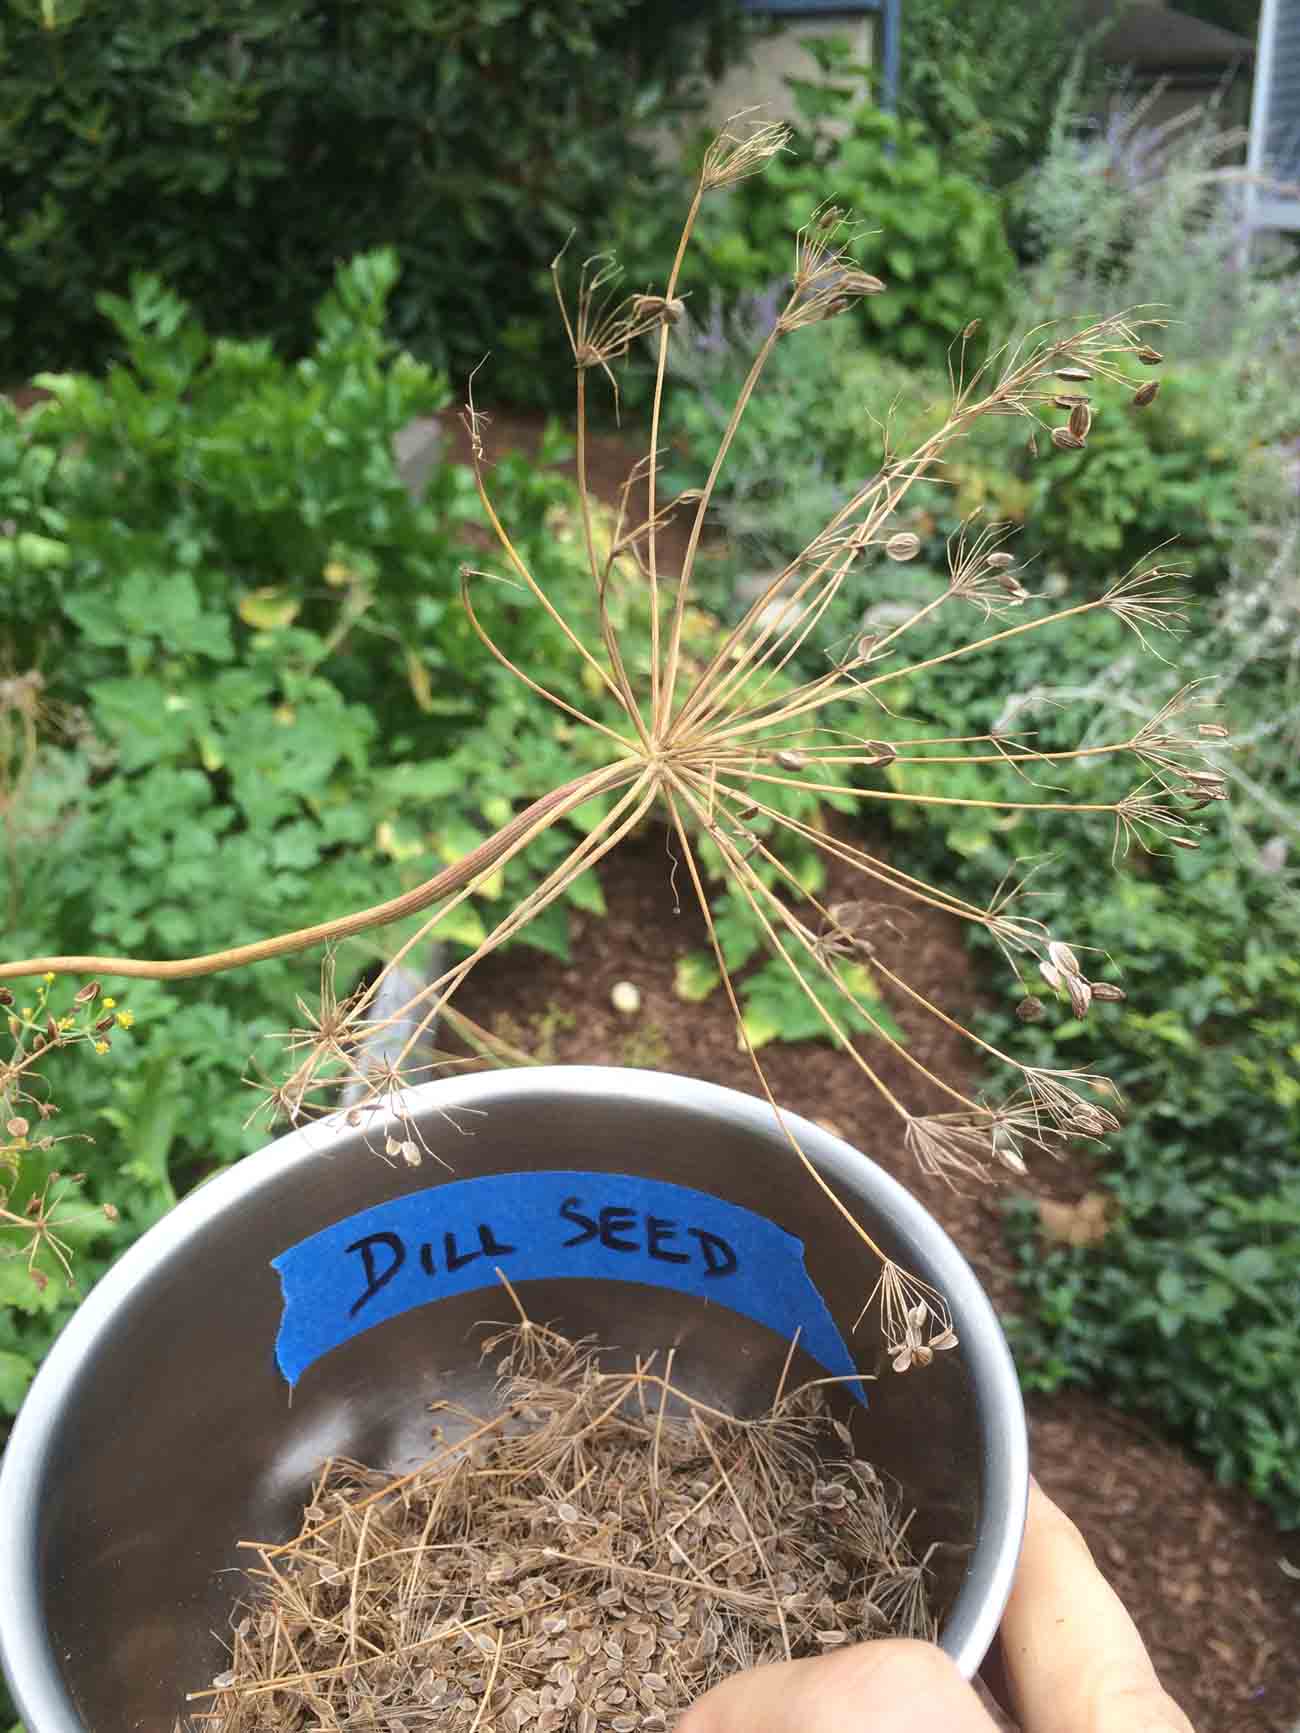 Saving dill seeds